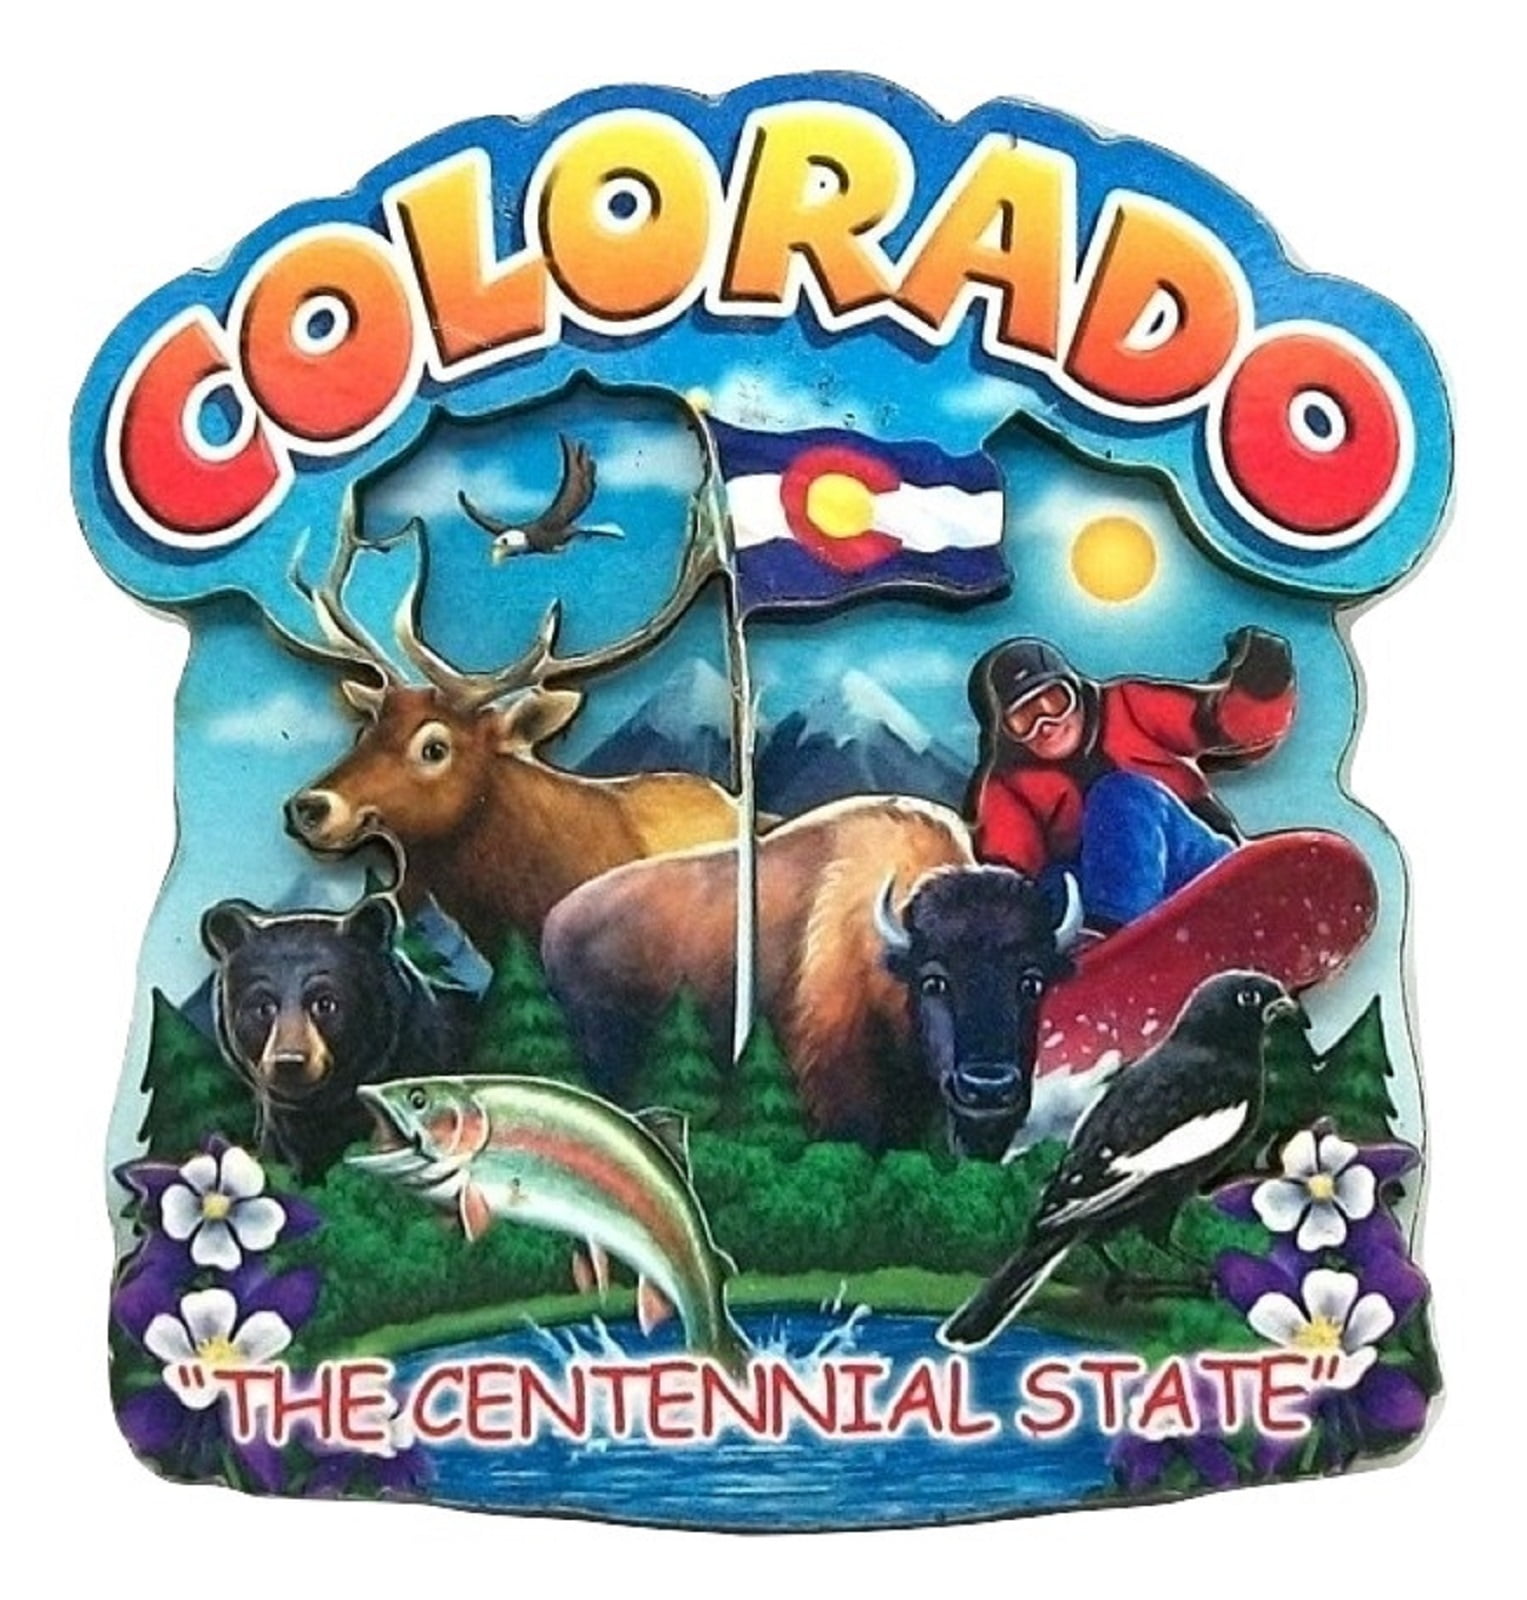 Colorado The Centennial State Est 1876 Artwood Fridge Magnet